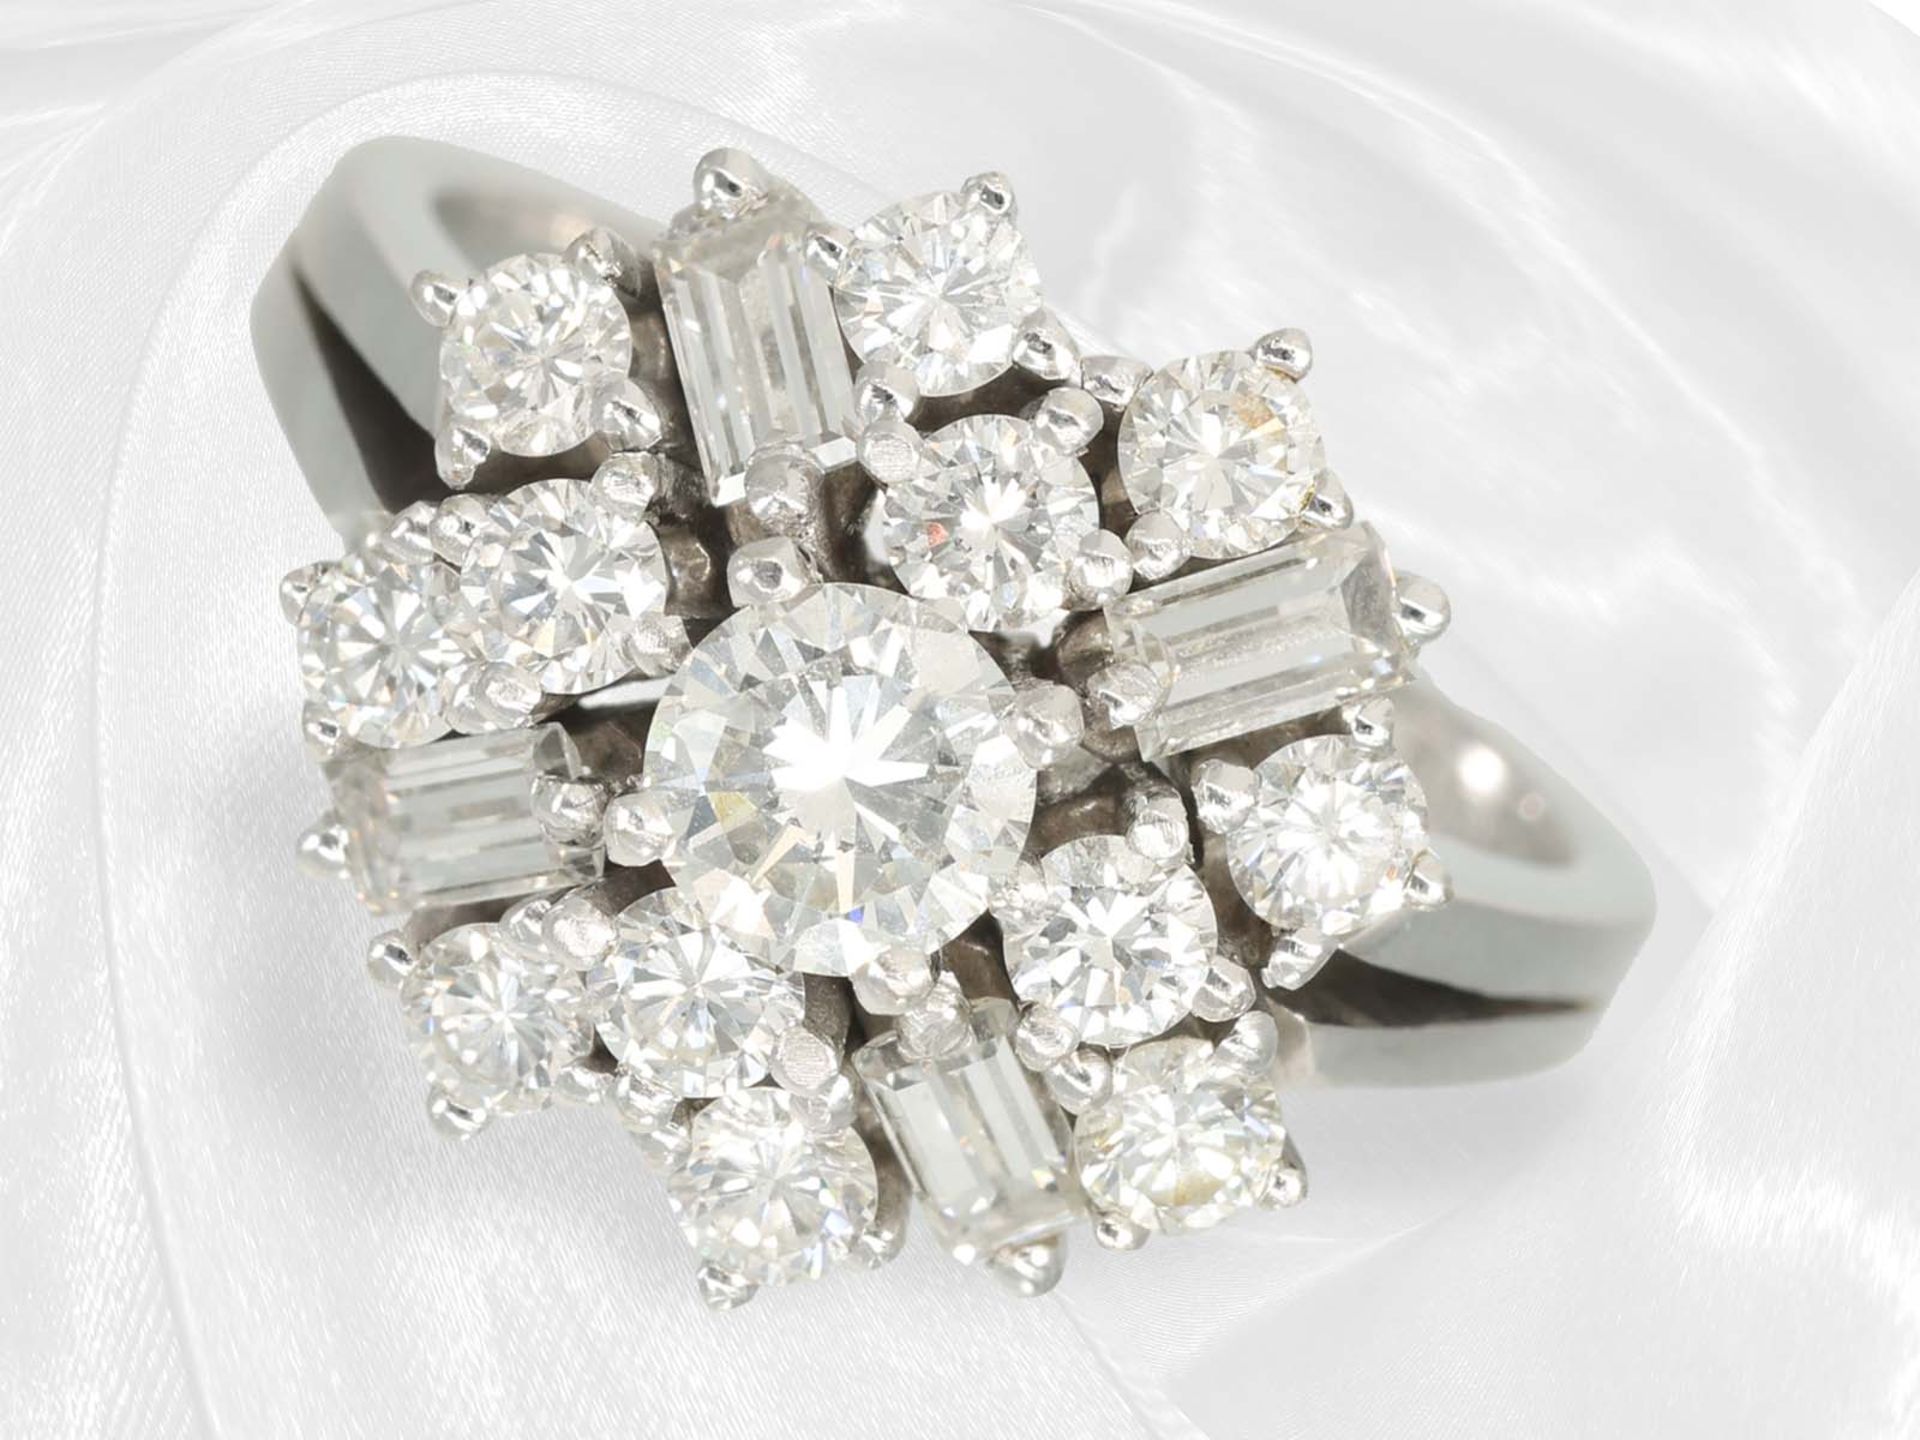 Attractive white gold vintage brilliant-cut diamond flower ring, approx. 2ct of fine brilliant-cut d